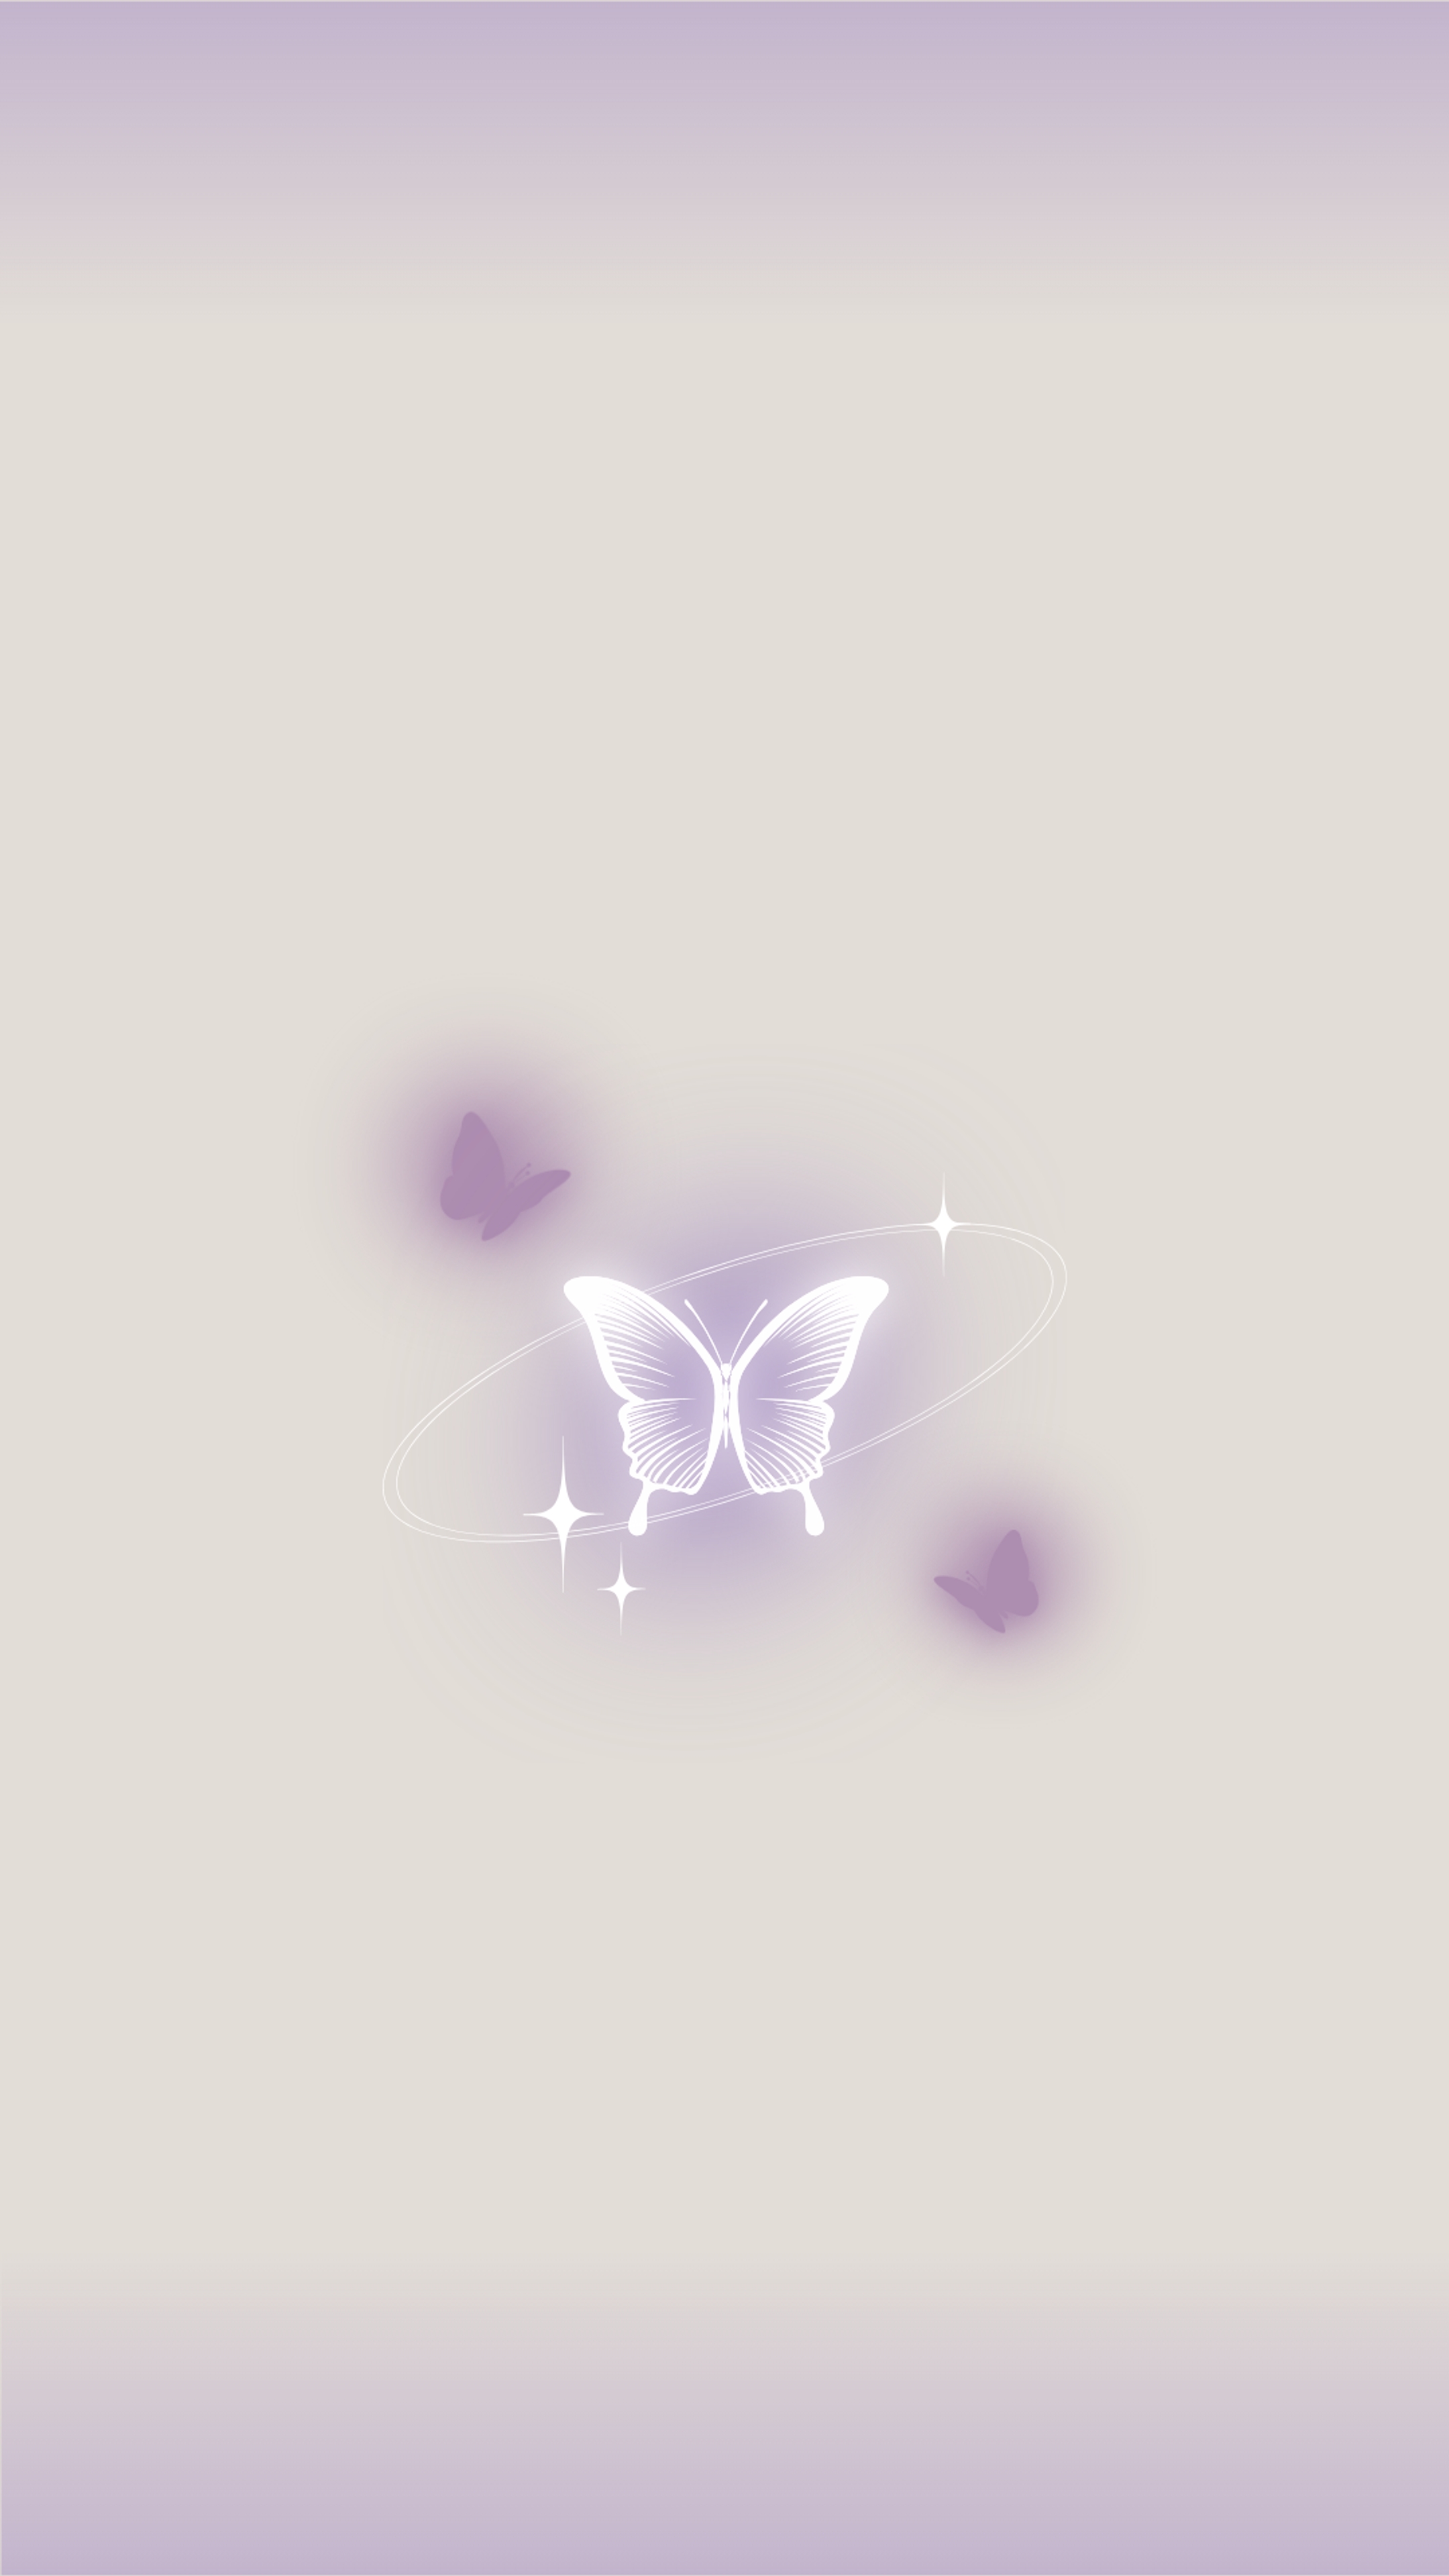 Shimmering Purple Butterflies on Soft Beige Background壁紙[c2a86703d1a24467afd0]